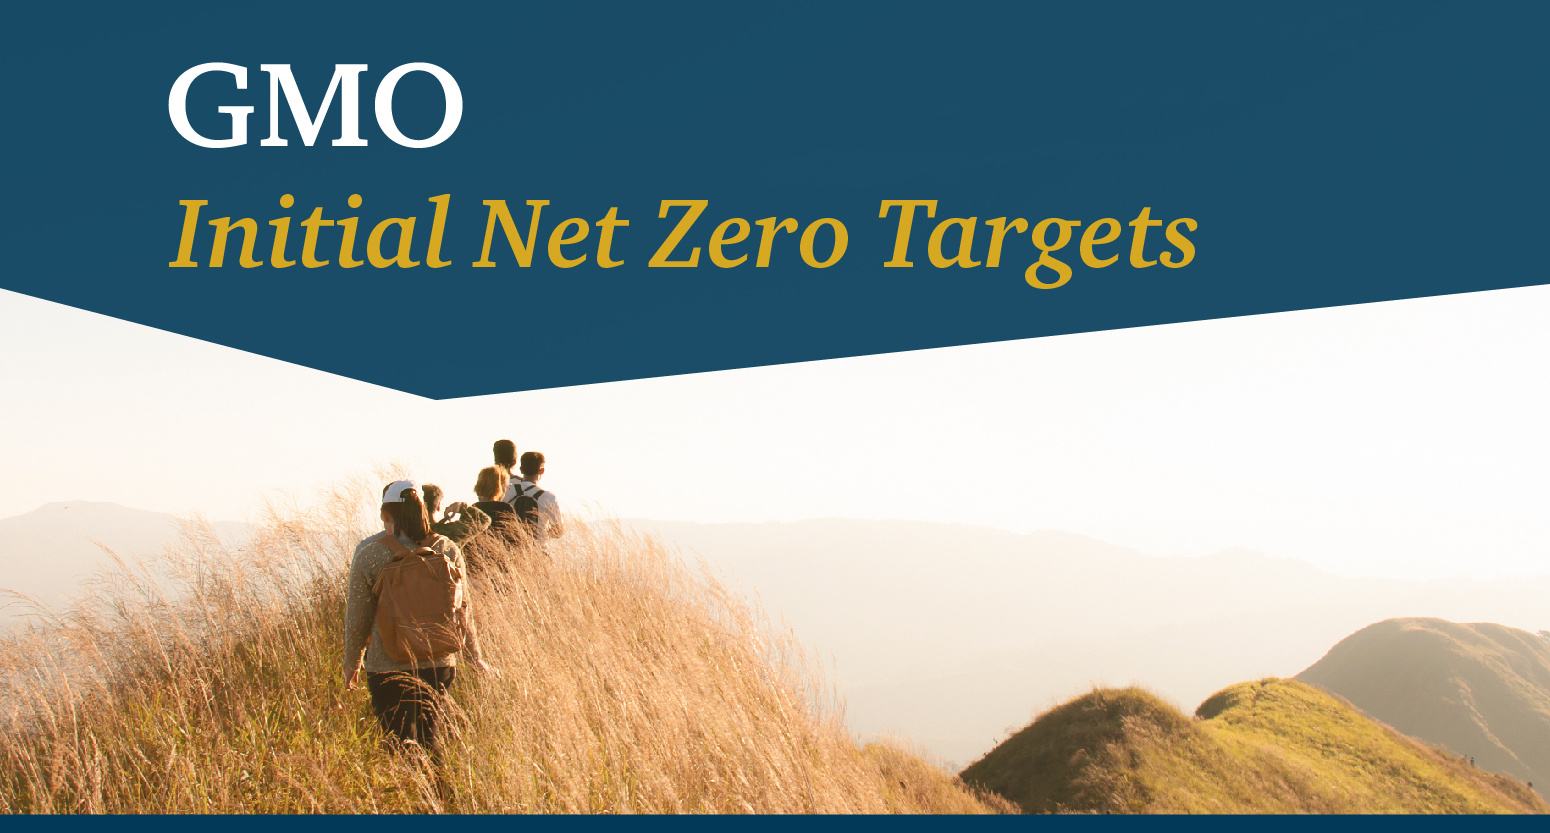 GMO Announces Initial Net Zero Targets_11-22_News-Media